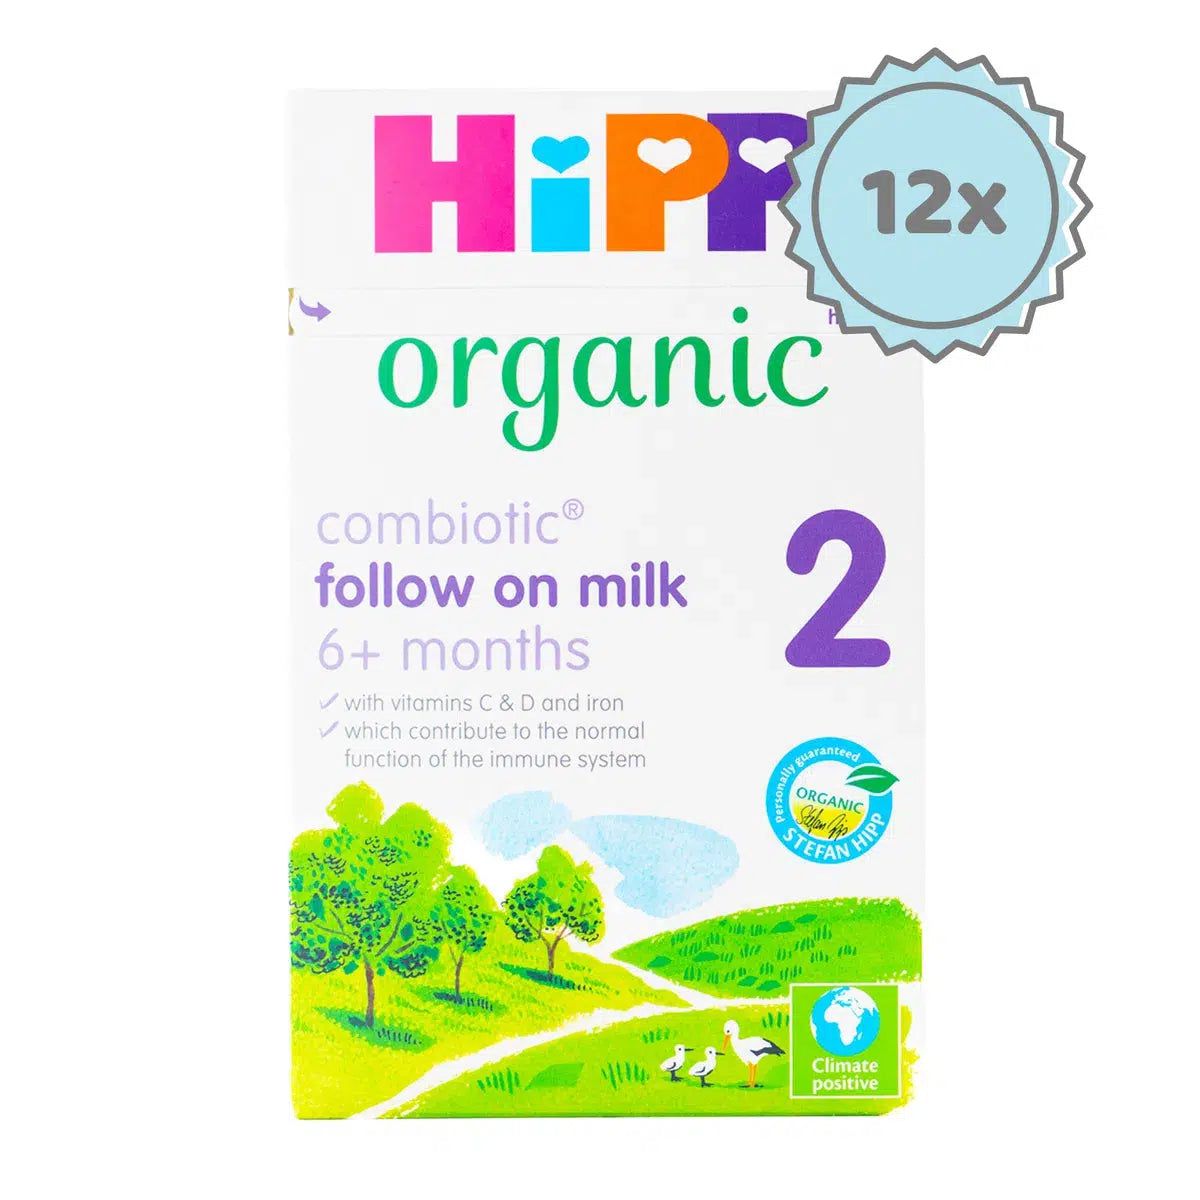 HiPP UK Stage 1 Organic Combiotic First Infant Milk Formula | 12 boxes